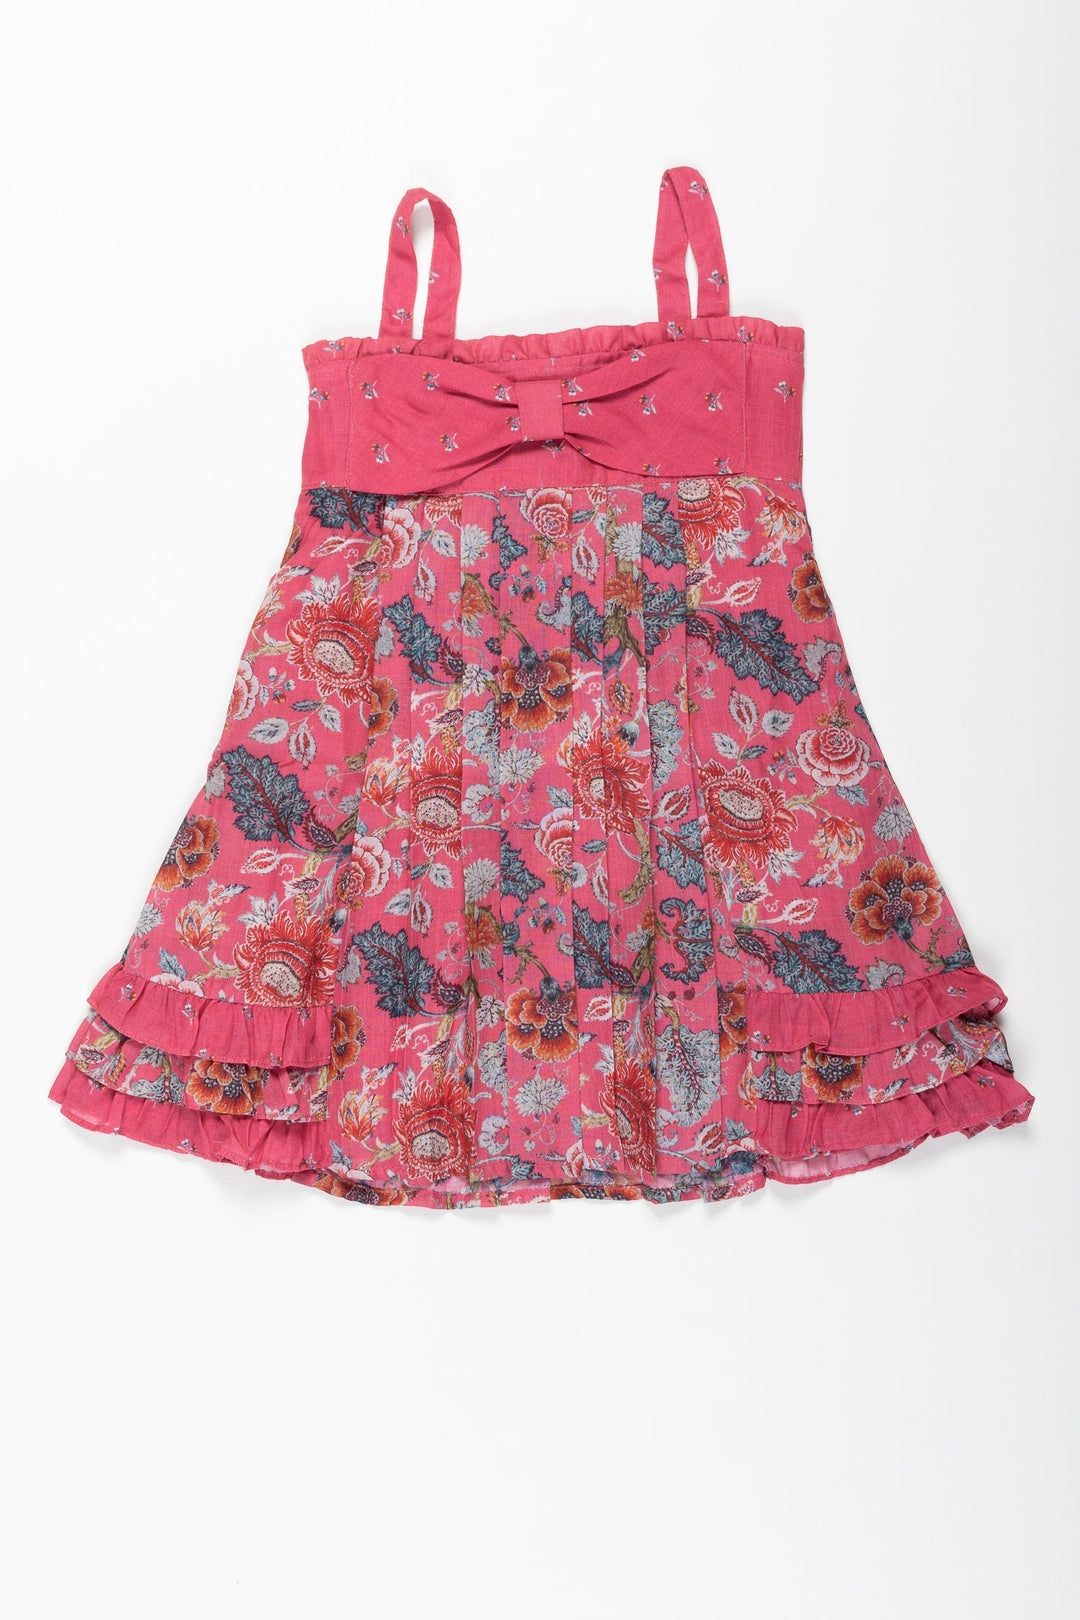 The Nesavu Girls Cotton Frock Radiant Rose Sleeveless Cotton Dress with Garden-Inspired Print for Girls Nesavu Girls Blossom Pink Floral Cotton Dress | Chic Summer Sleeveless Frock | The Nesavu